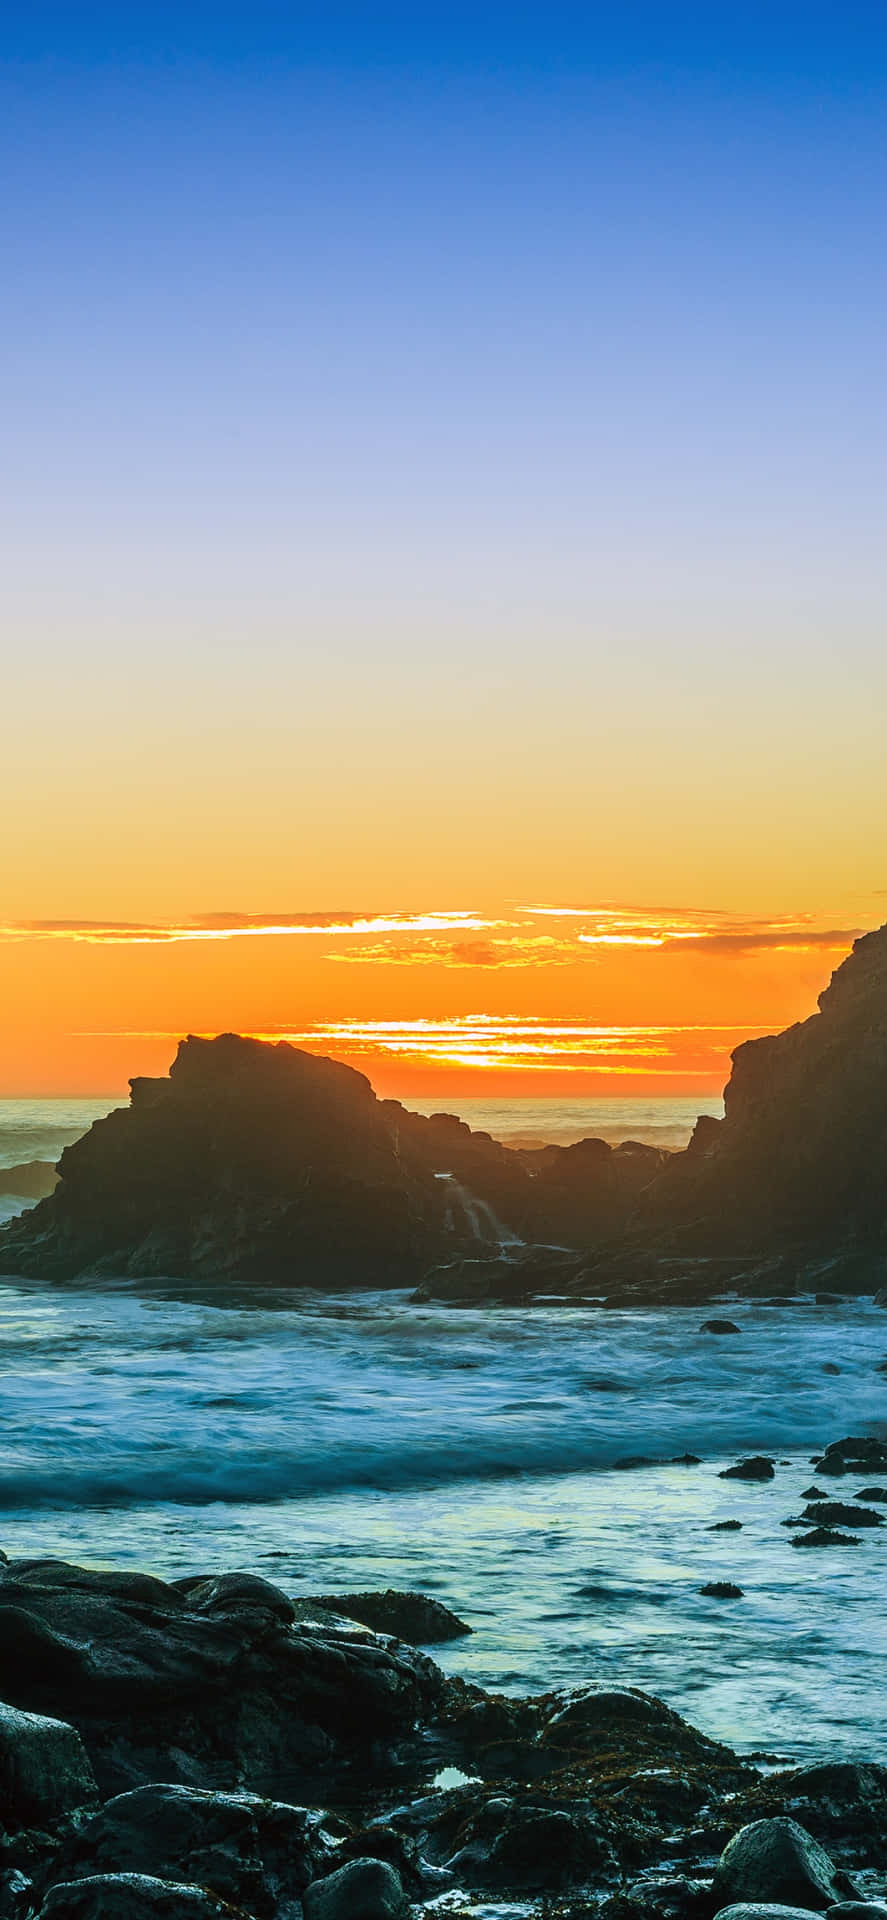 Iphone X Malibu baggrund Blå & Orange himmel.